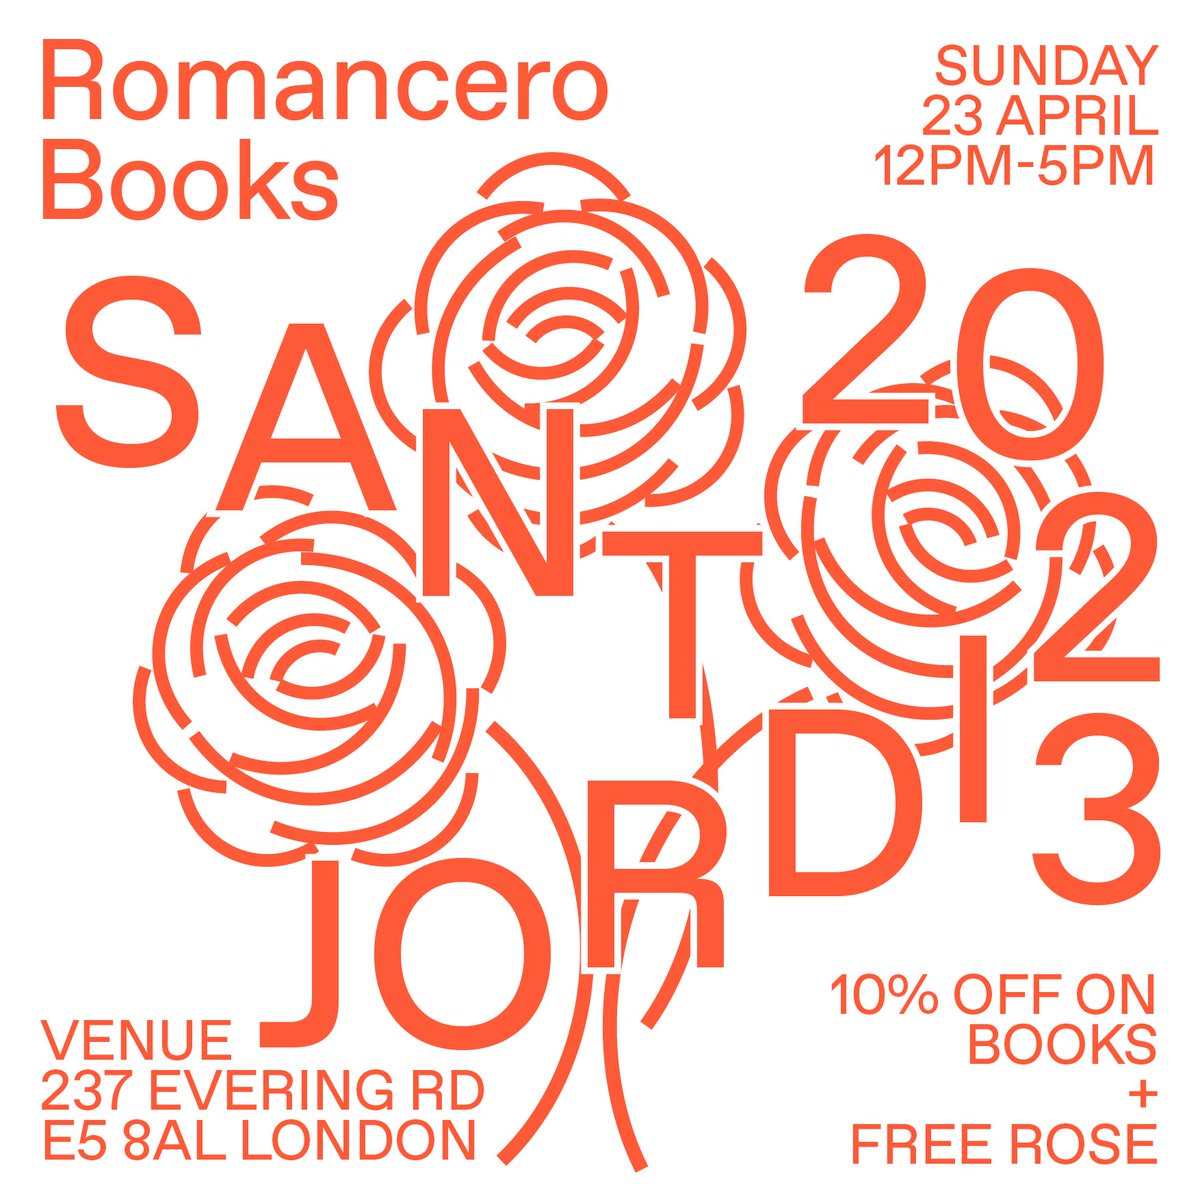 🌹🐉Sant Jordi celebration is back at Romancero Books - Sunday 23 April - bookstall - free rose when purchasing 10% off books 🌹🐉